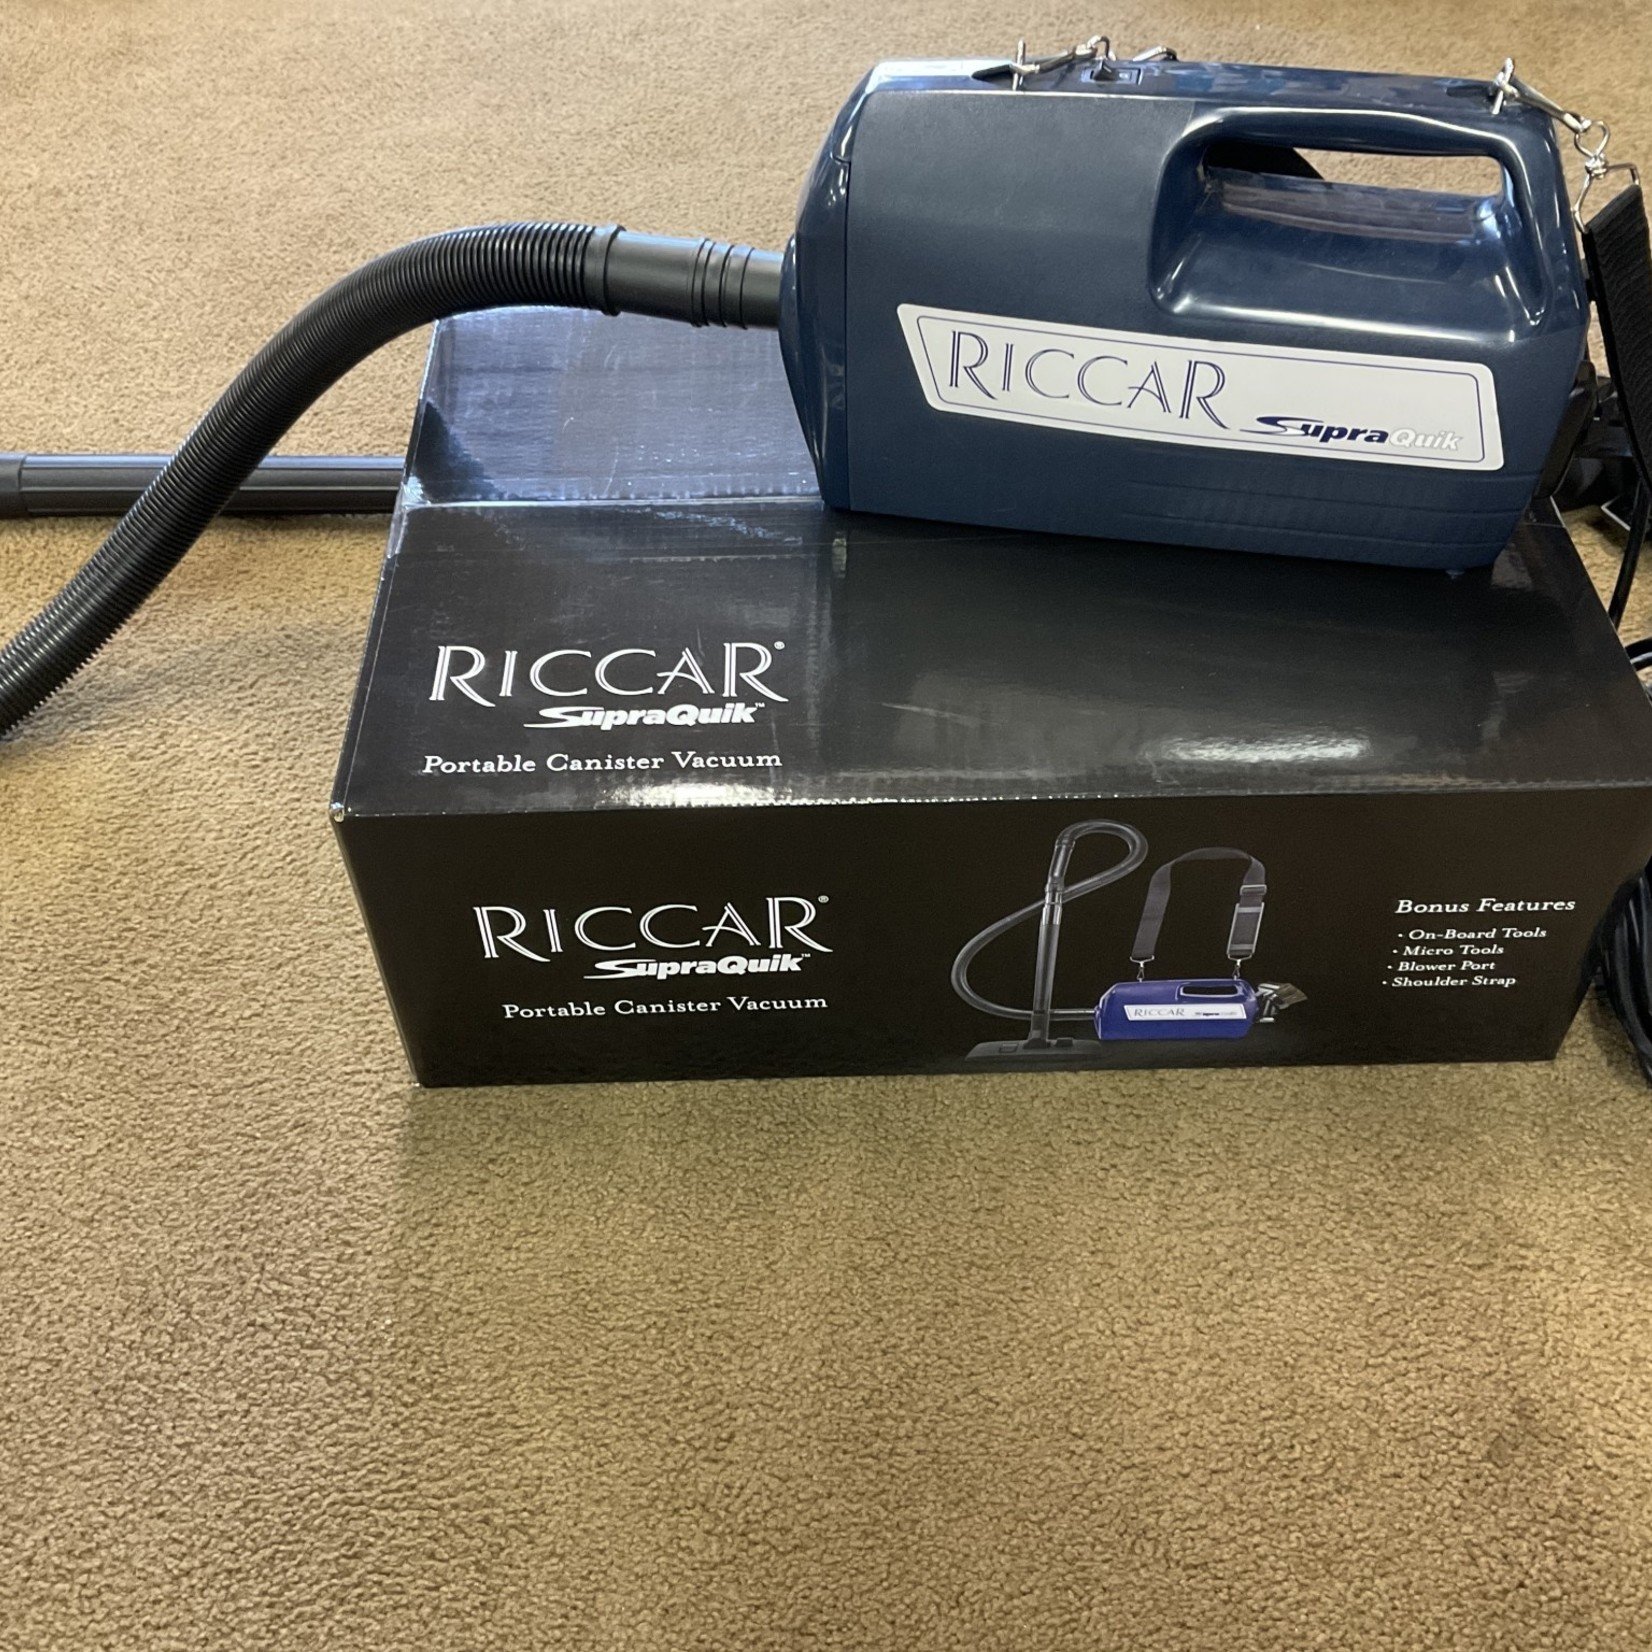 Riccar Riccar Supra Quik Portable Canister Vacuum